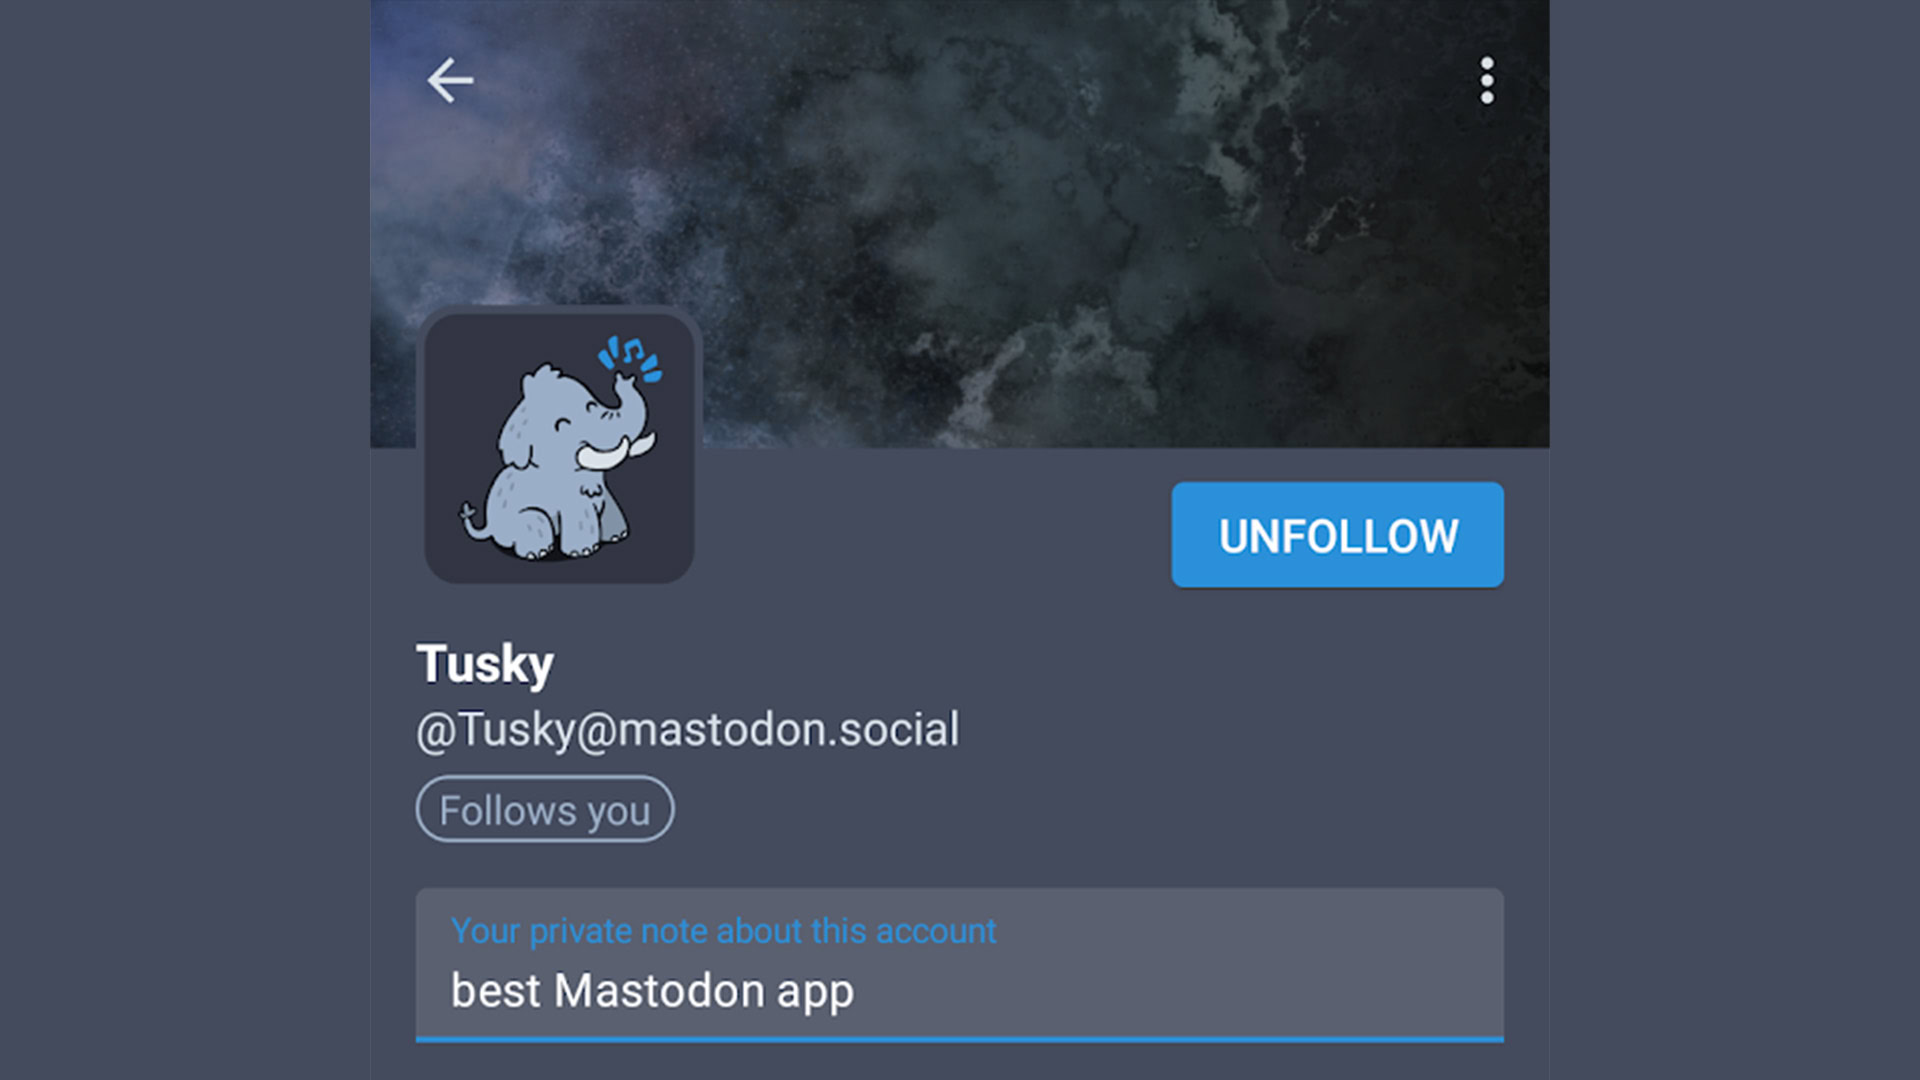 Tusky melhores aplicativos Mastodon para Android